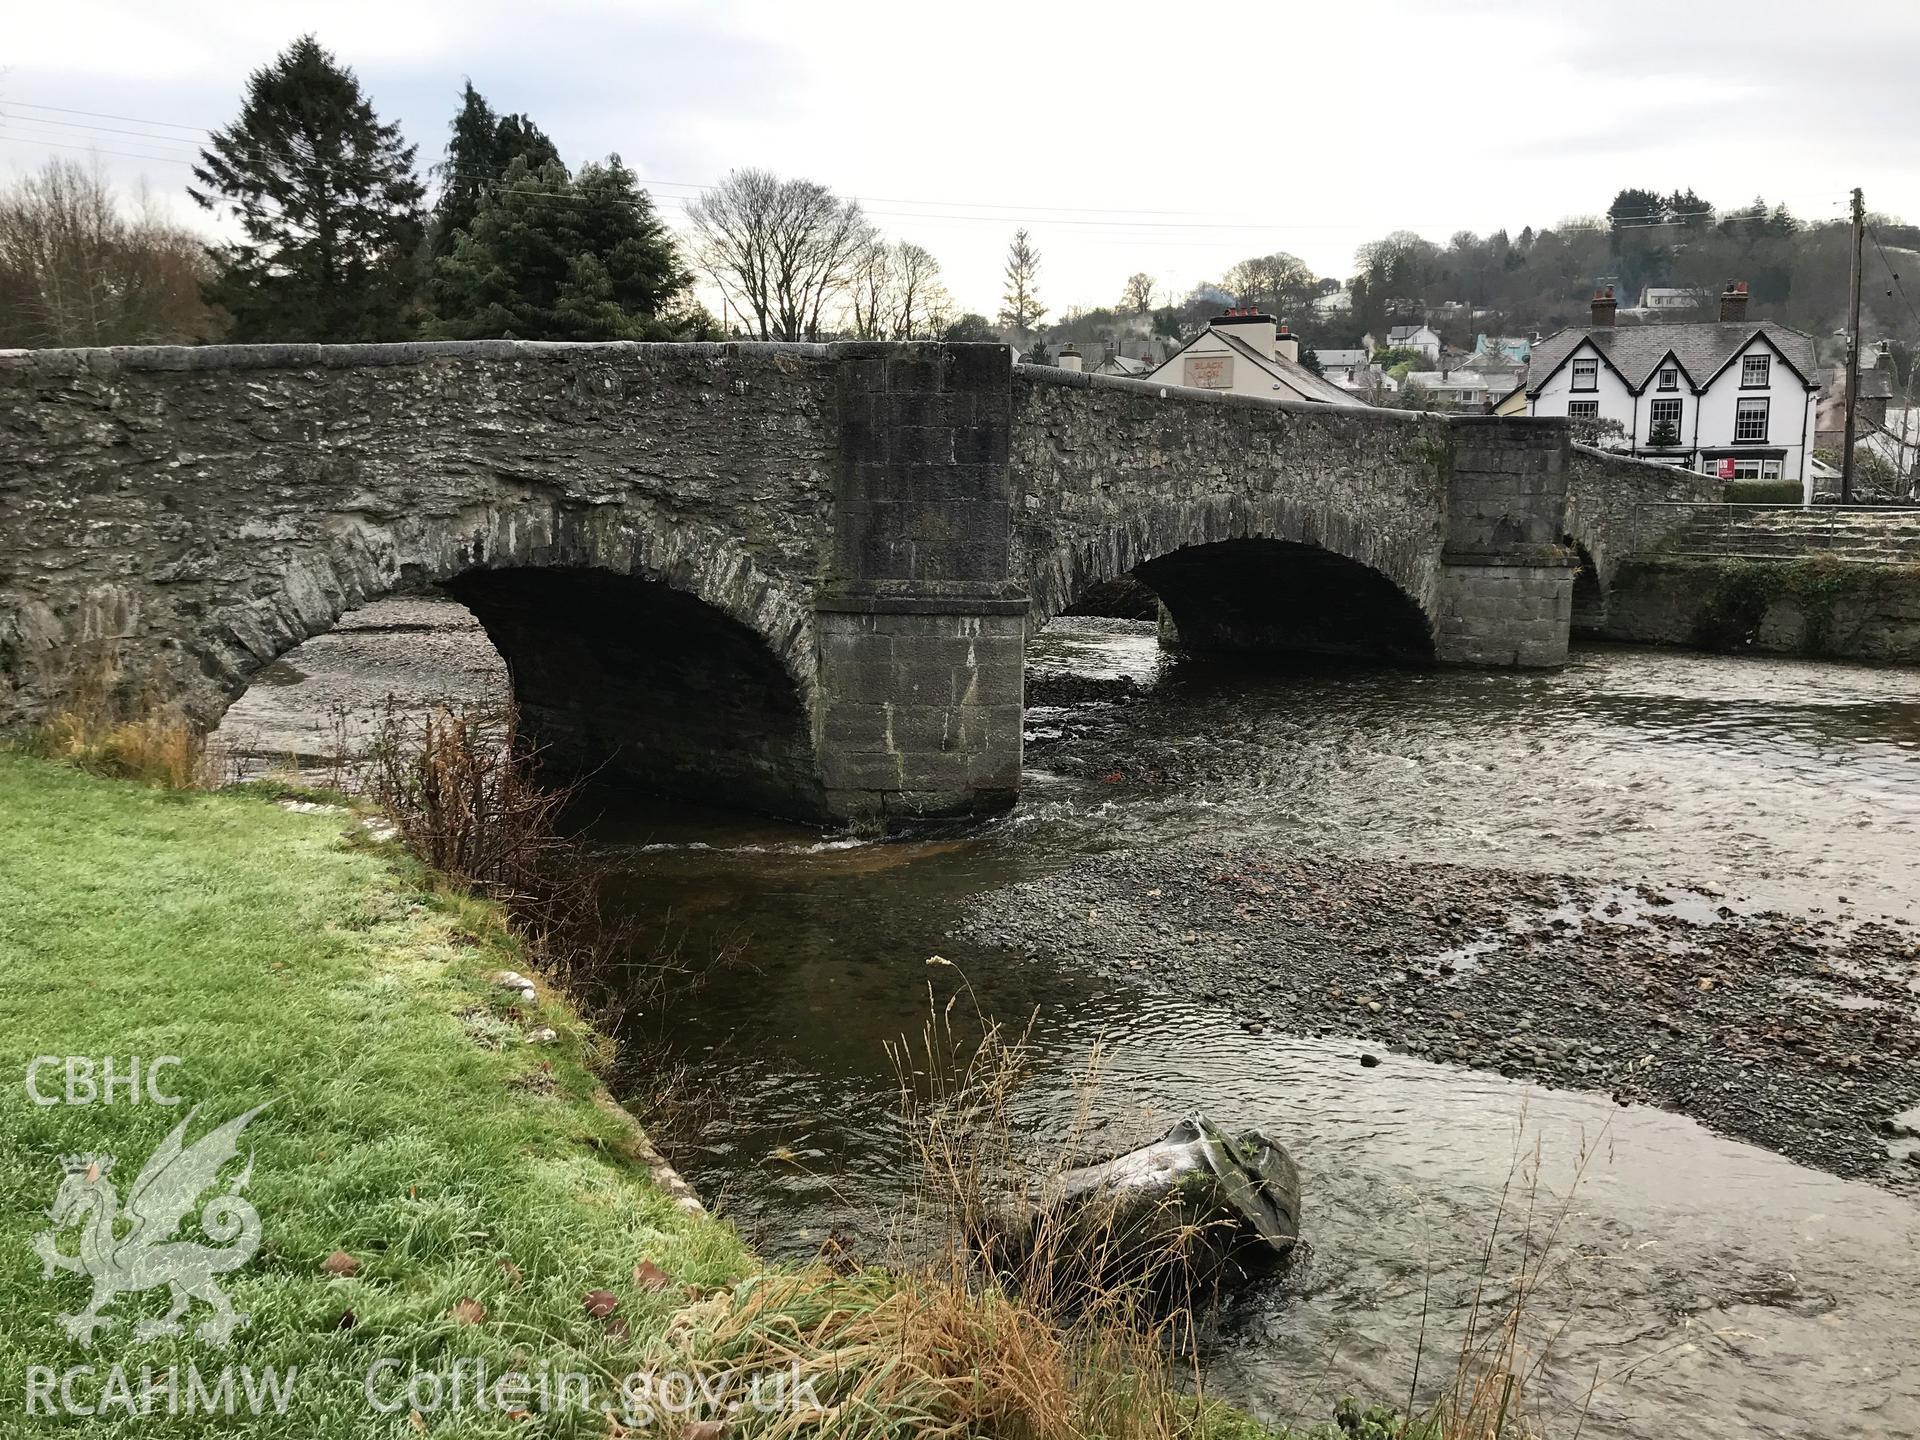 Digital colour photograph showing Llanfair Talhaiarn bridge, crossing the river Elwy, taken by Paul Davis on 3rd December 2019.